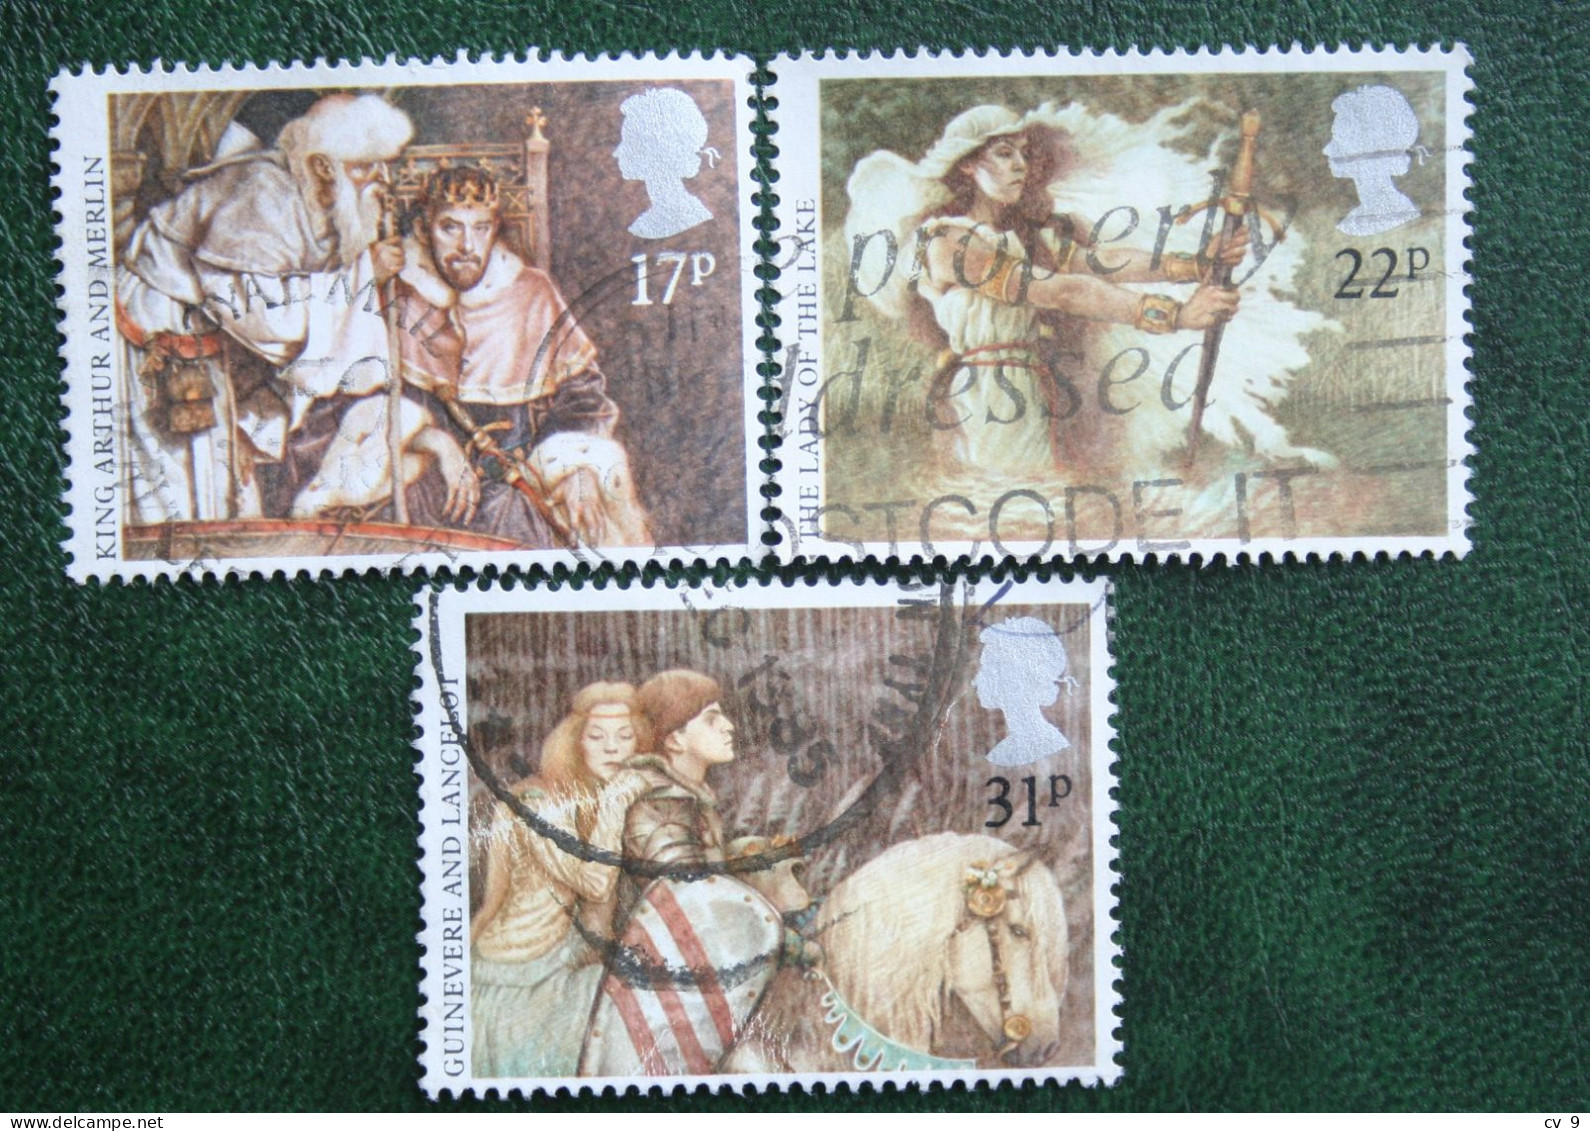 ARTHURIAN LEGENDS (Mi 1039-1041) 1985 Used Gebruikt Oblitere ENGLAND GRANDE-BRETAGNE GB GREAT BRITAIN - Used Stamps